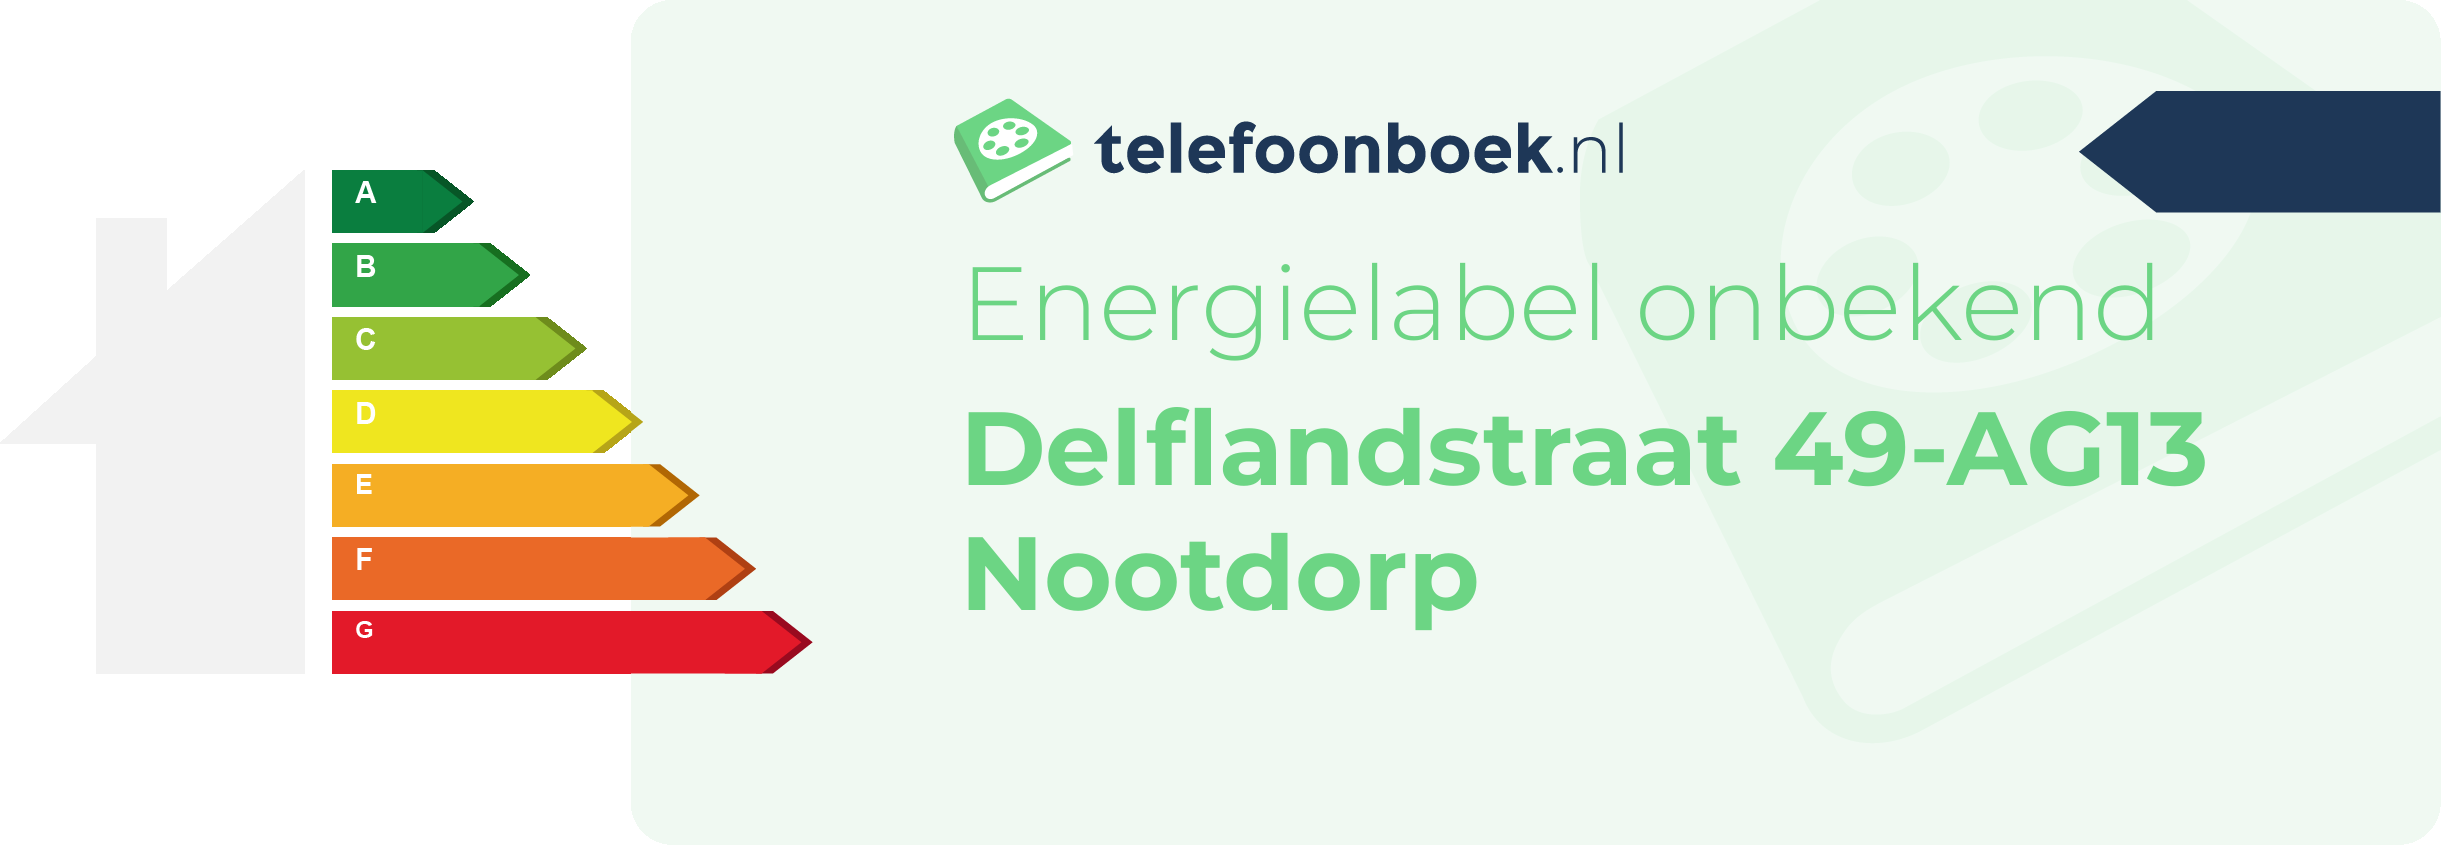 Energielabel Delflandstraat 49-AG13 Nootdorp